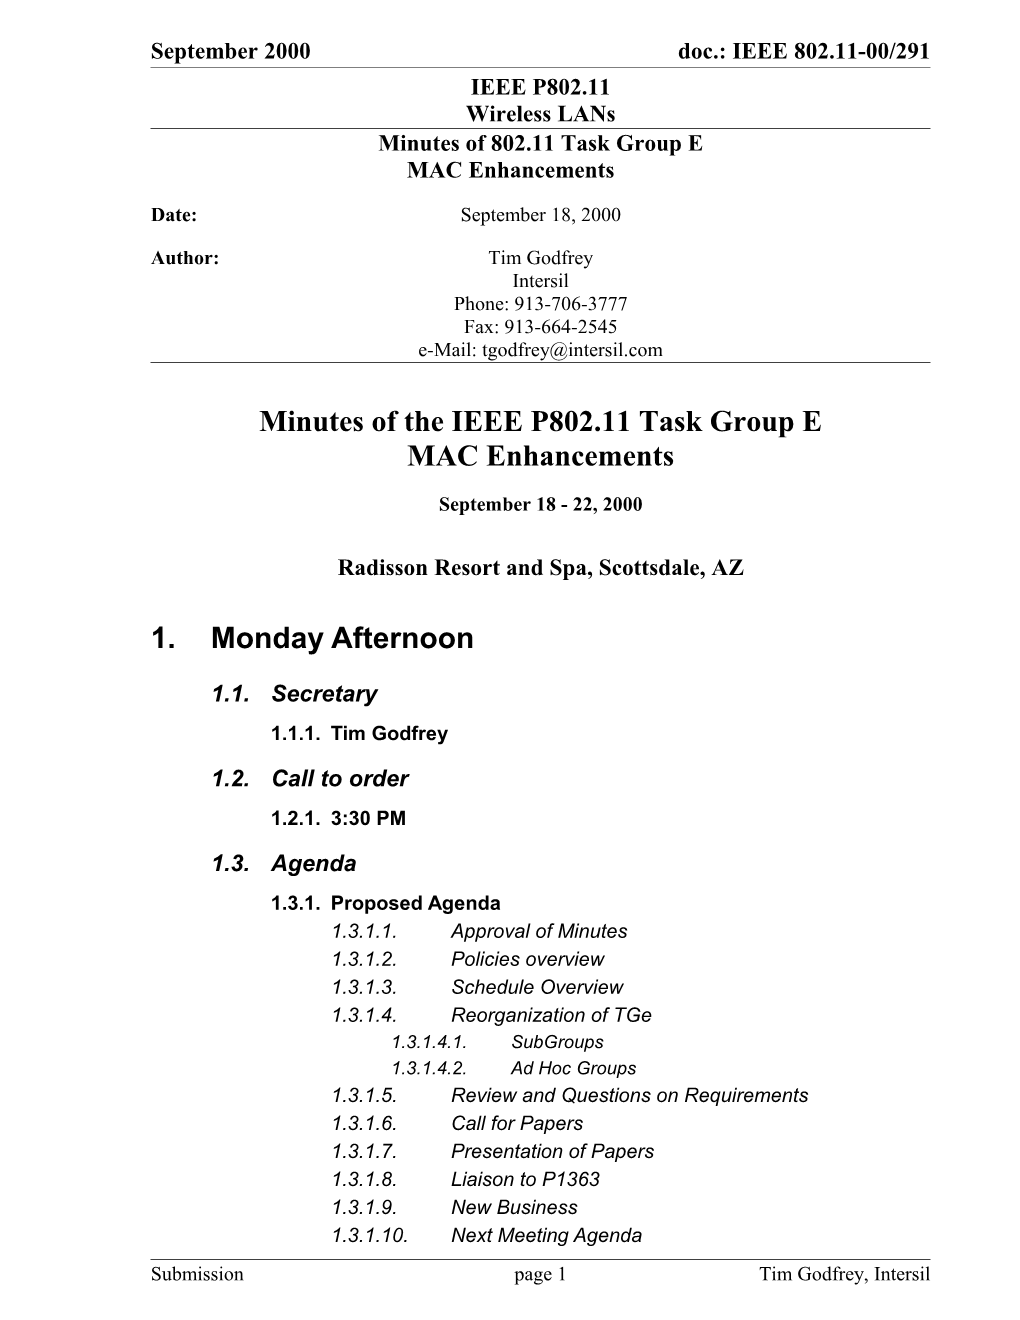 Minutes of 802.11 Task Group E MAC Enhancements